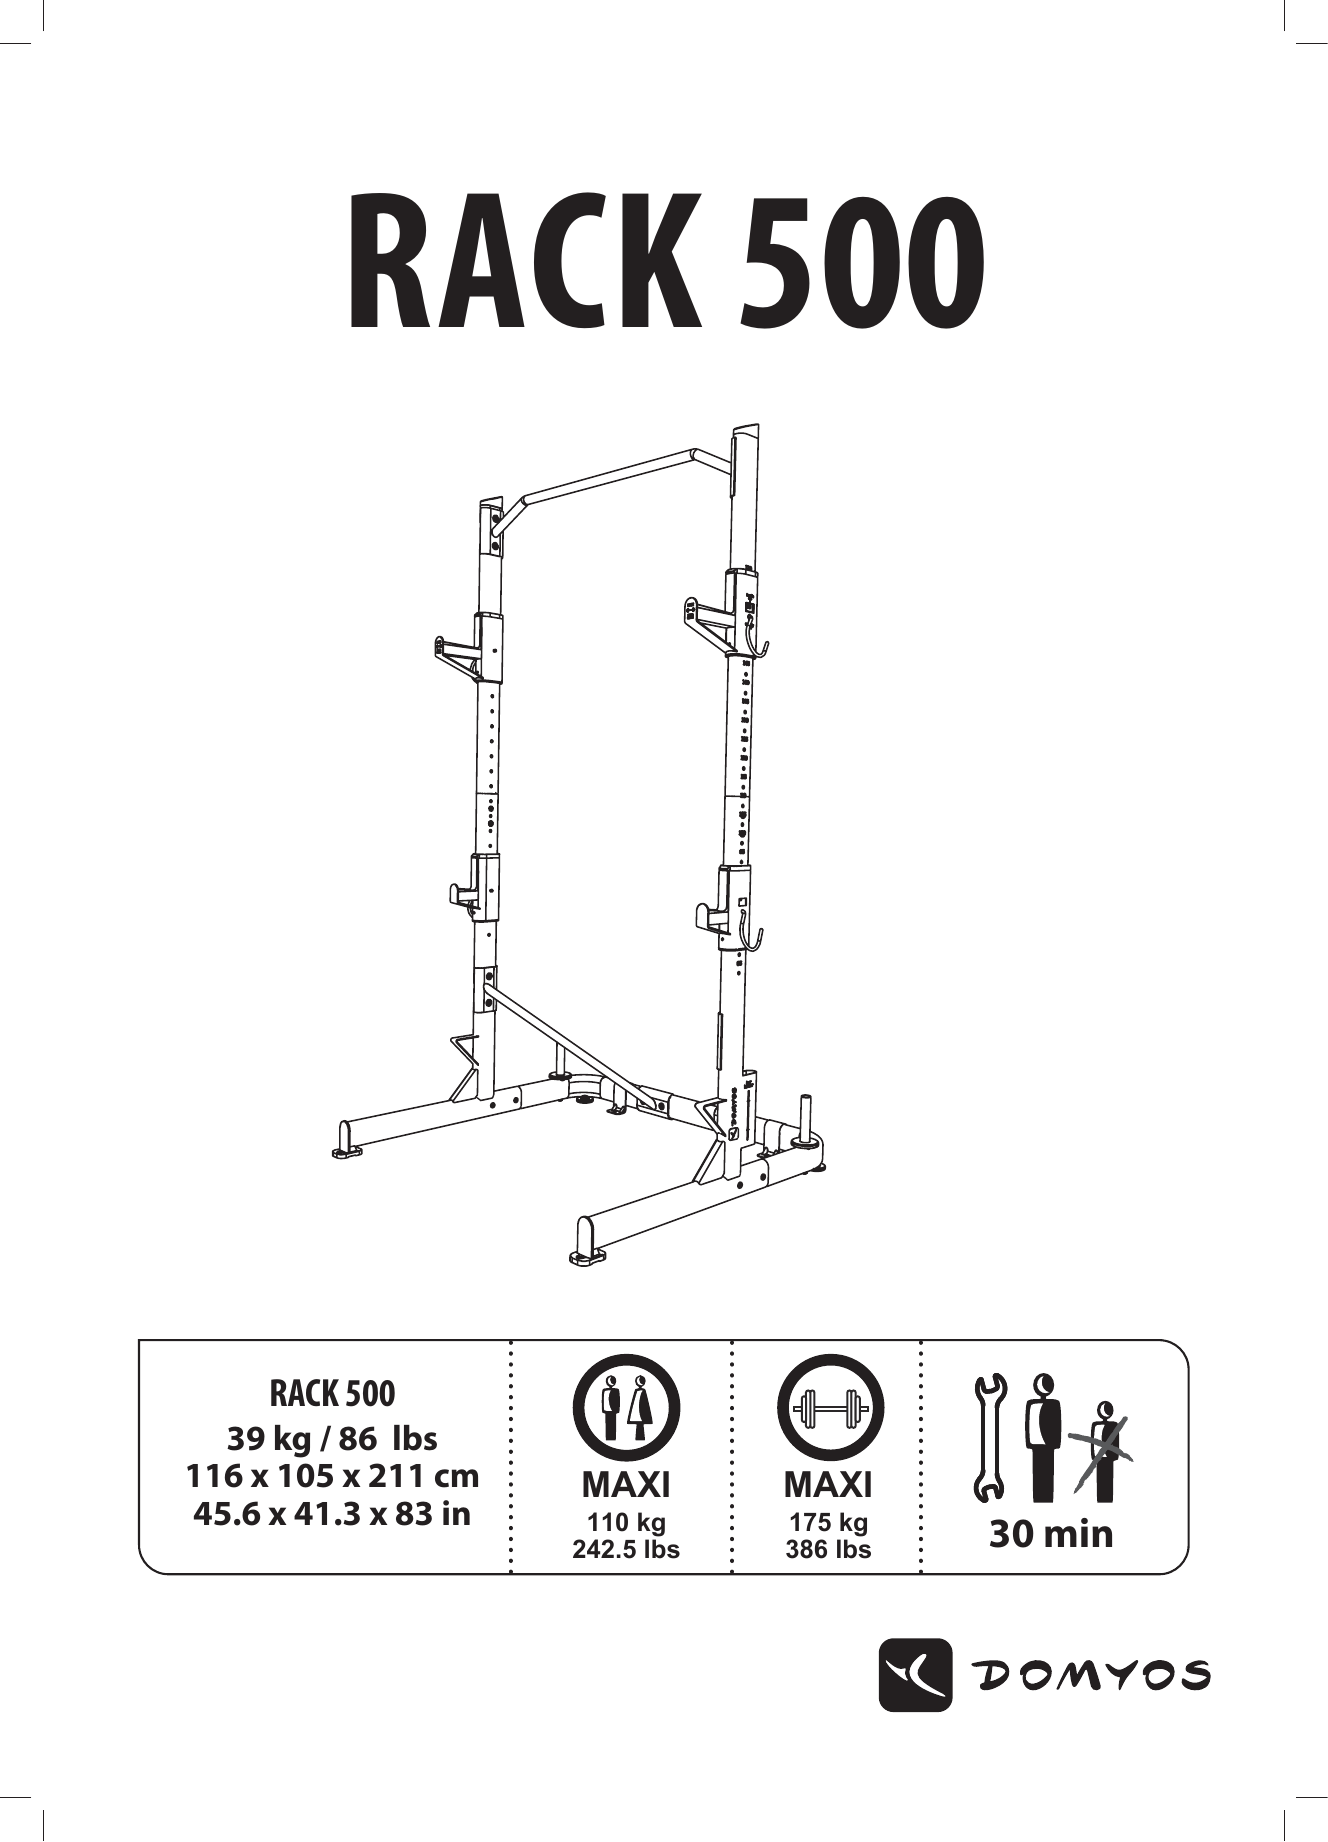 domyos rack 500